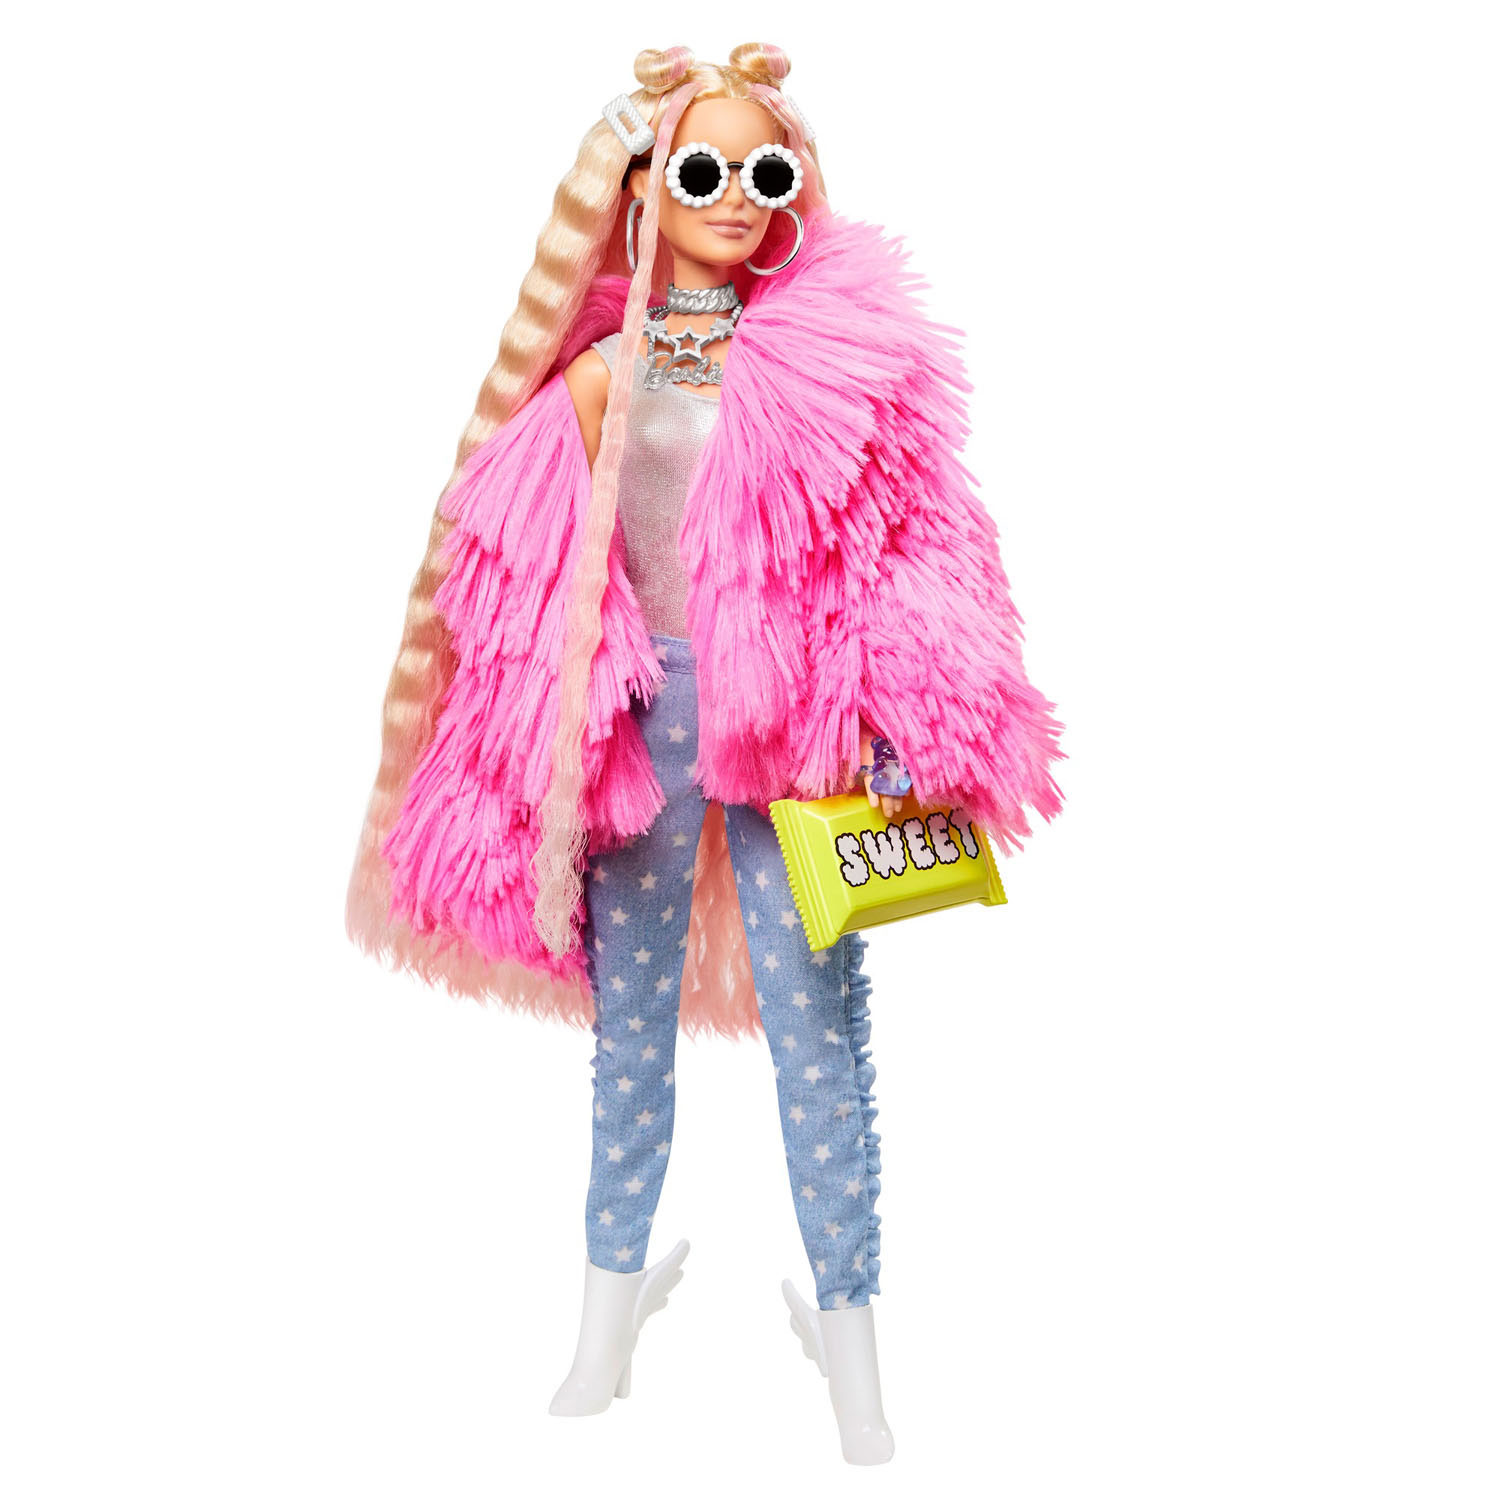 Barbie Extra Doll – Flauschige rosa Jacke